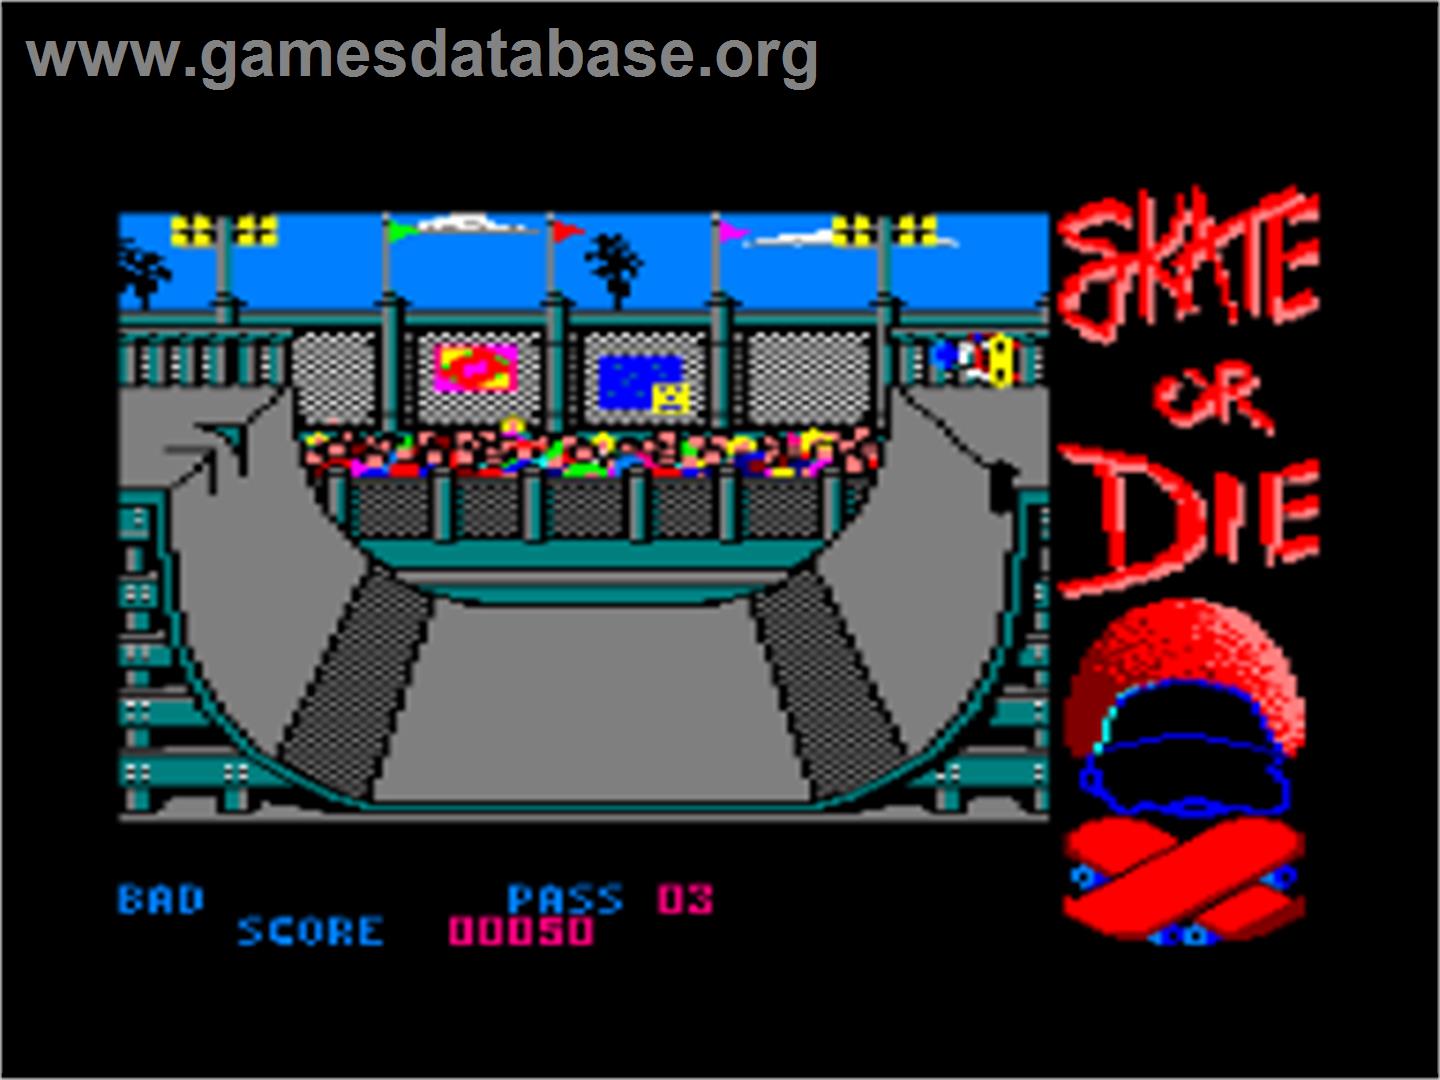 Skate or Die - Amstrad CPC - Artwork - In Game